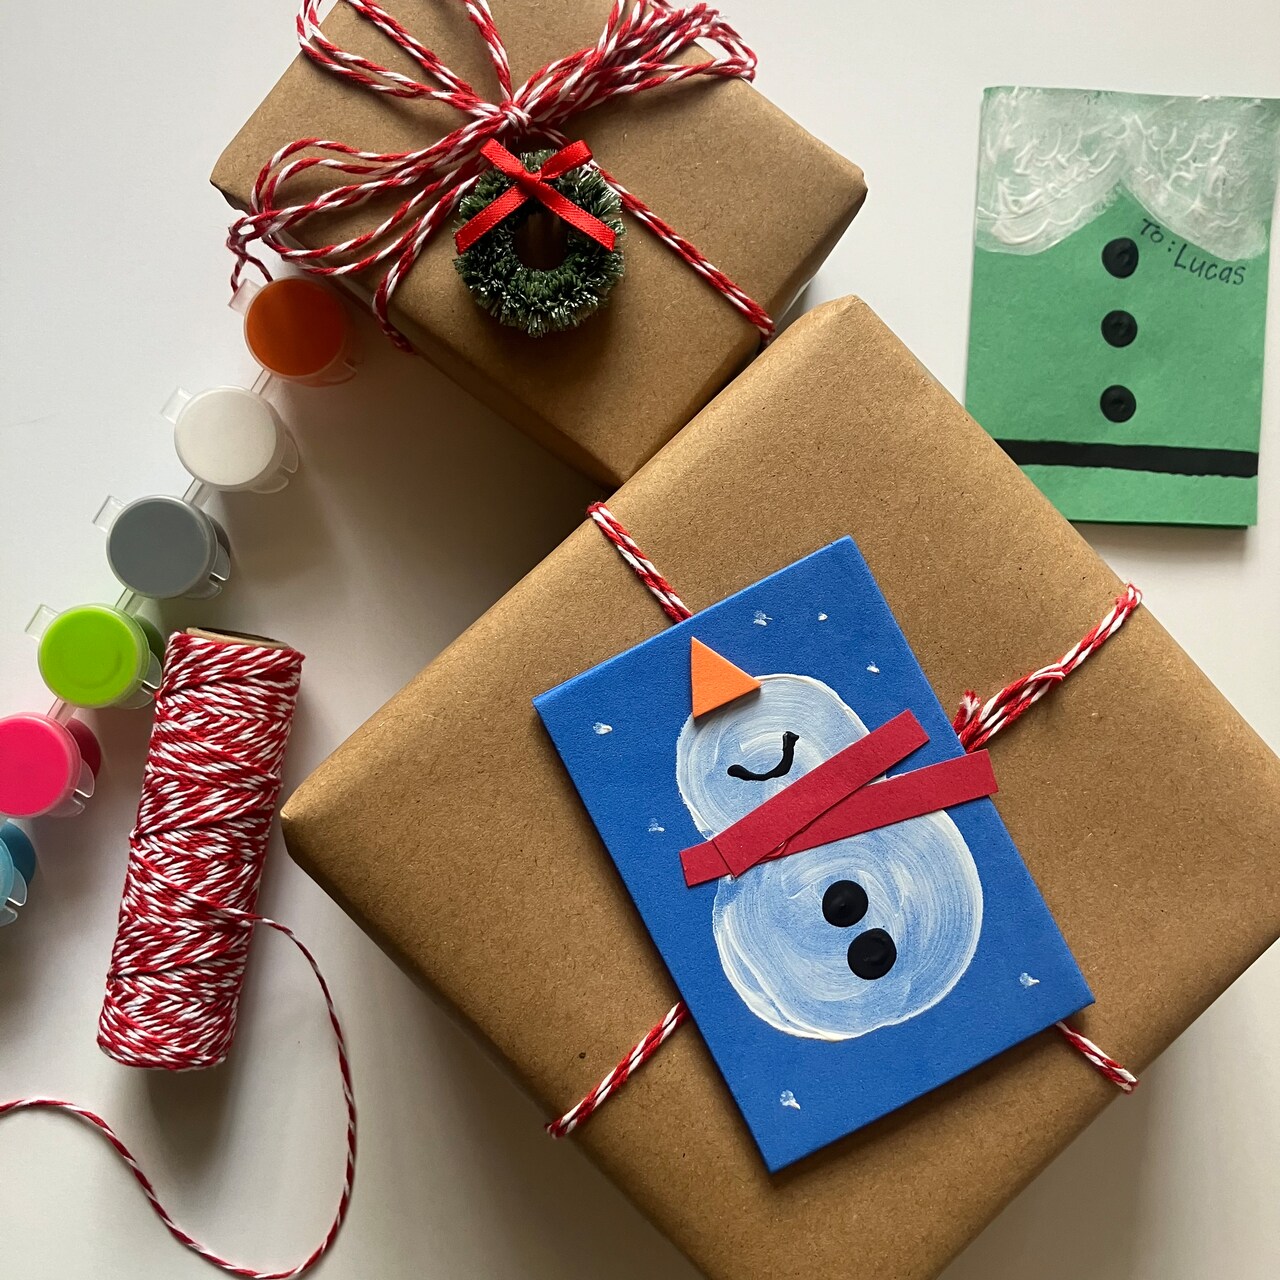 Kids Club: Learn to Gift Wrap with Elizabeth Barrick